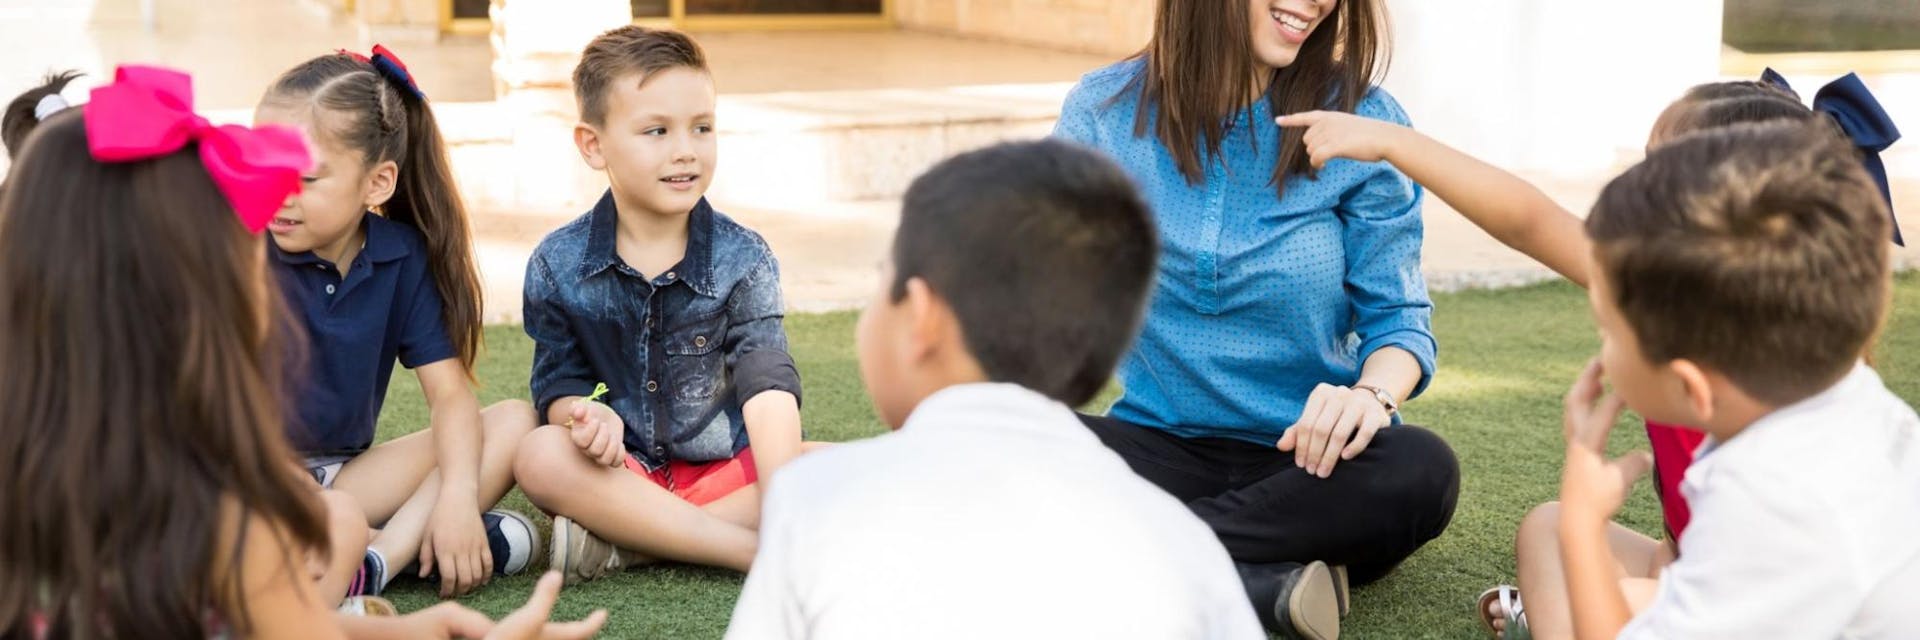 Children sit in a restorative circle during restorative justice activities.